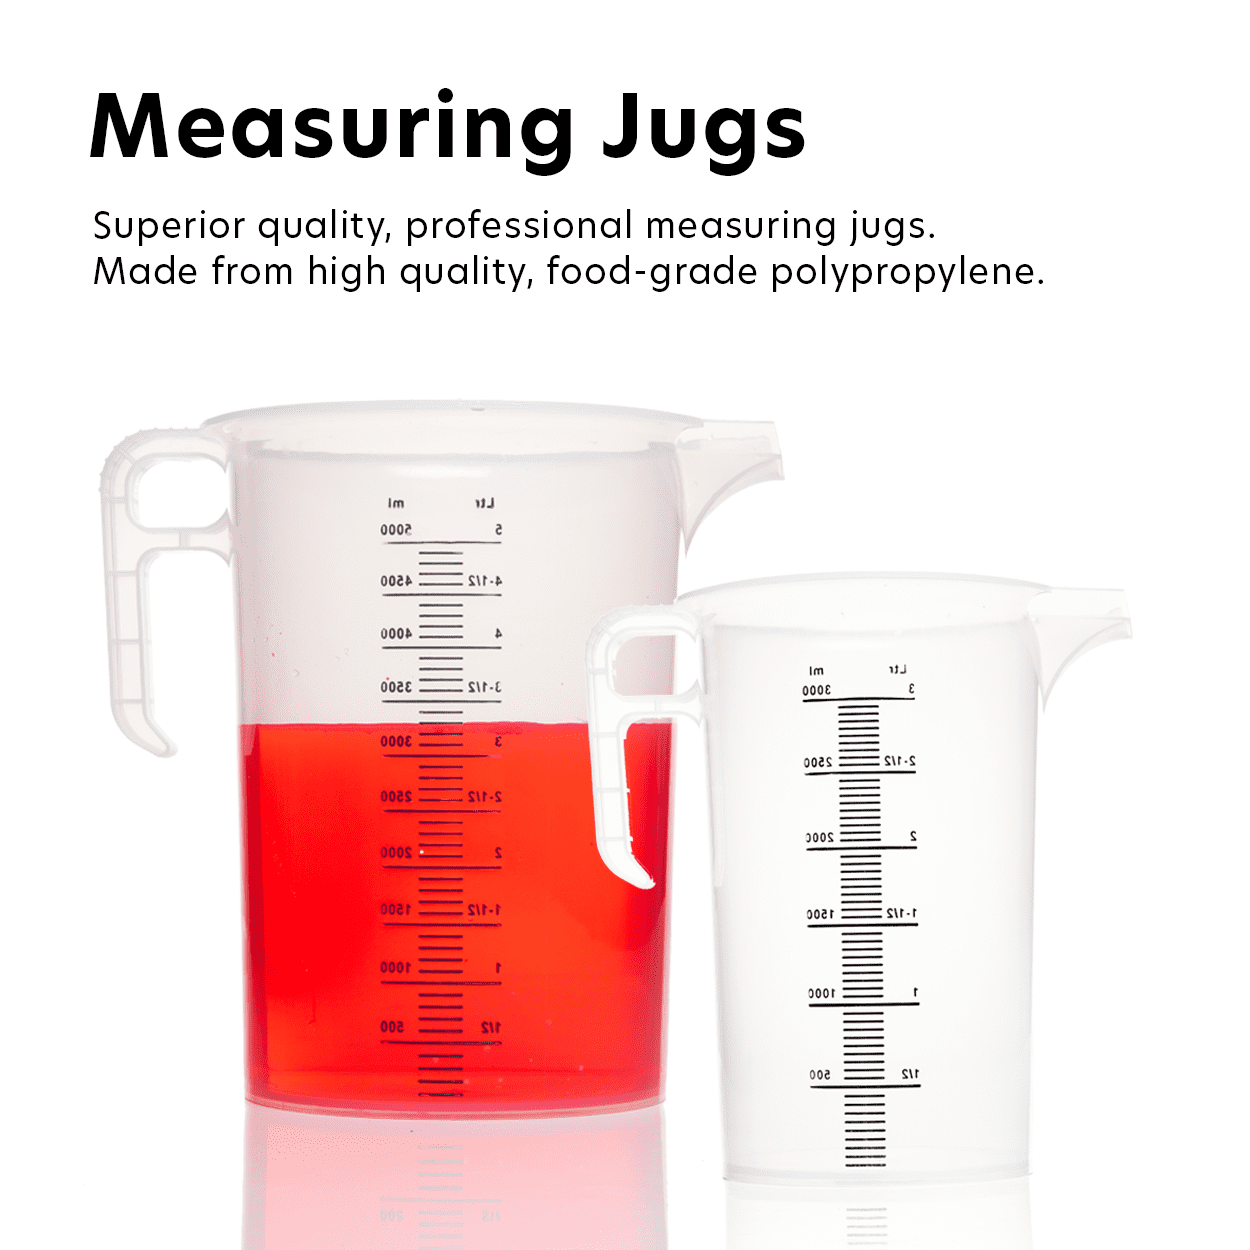 Measuring Jugs